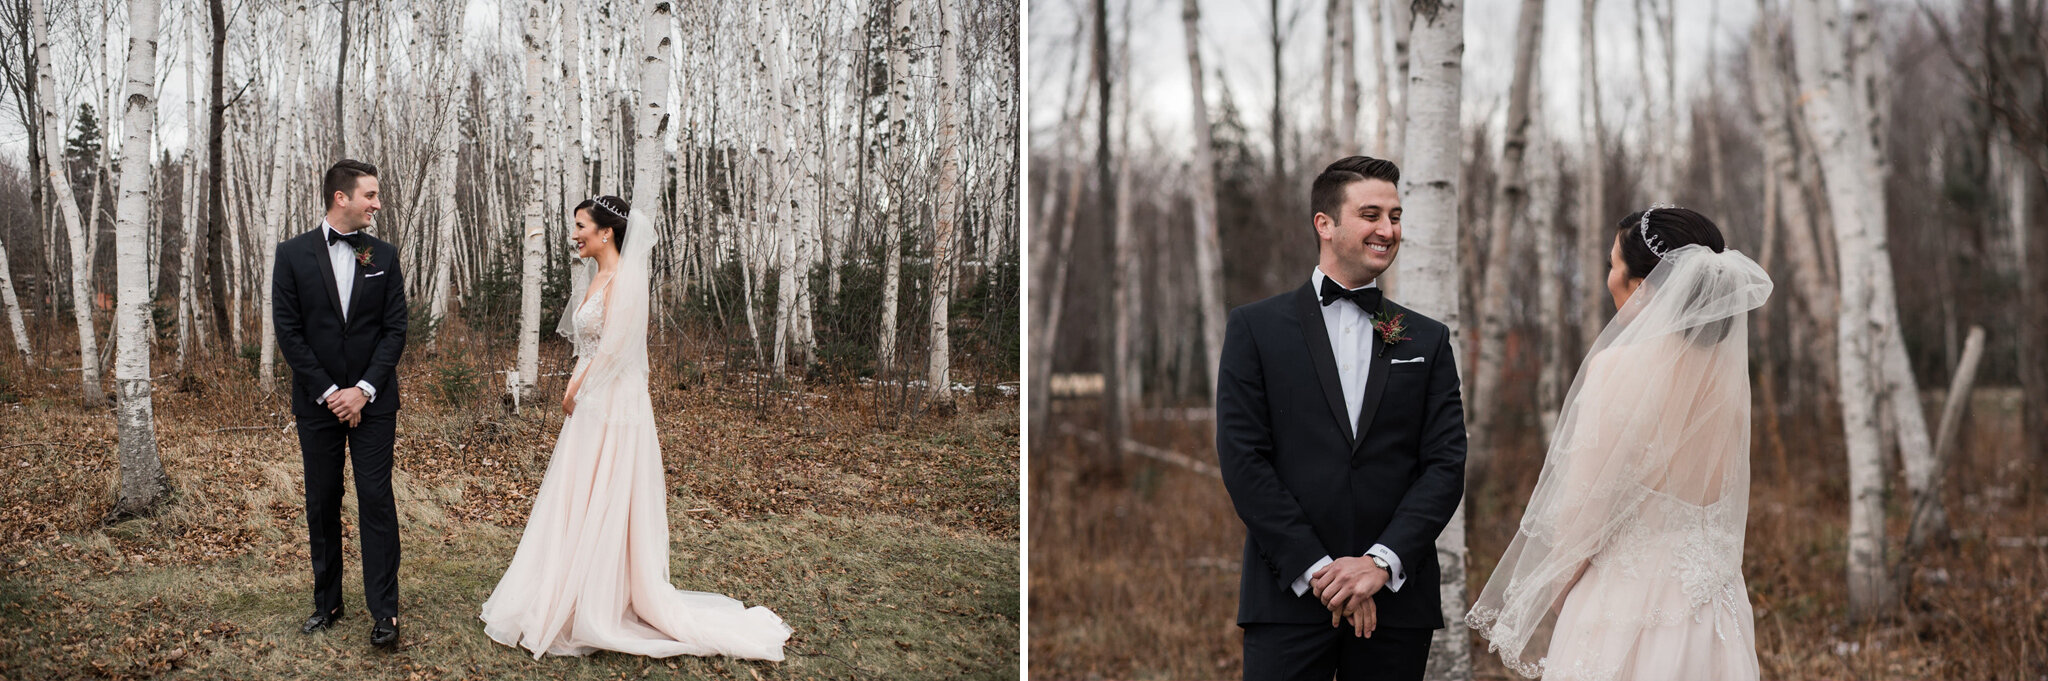 321-first-look-bride-groom-winter-birch-trees-wedding-photographer-toronto-ontario.jpg